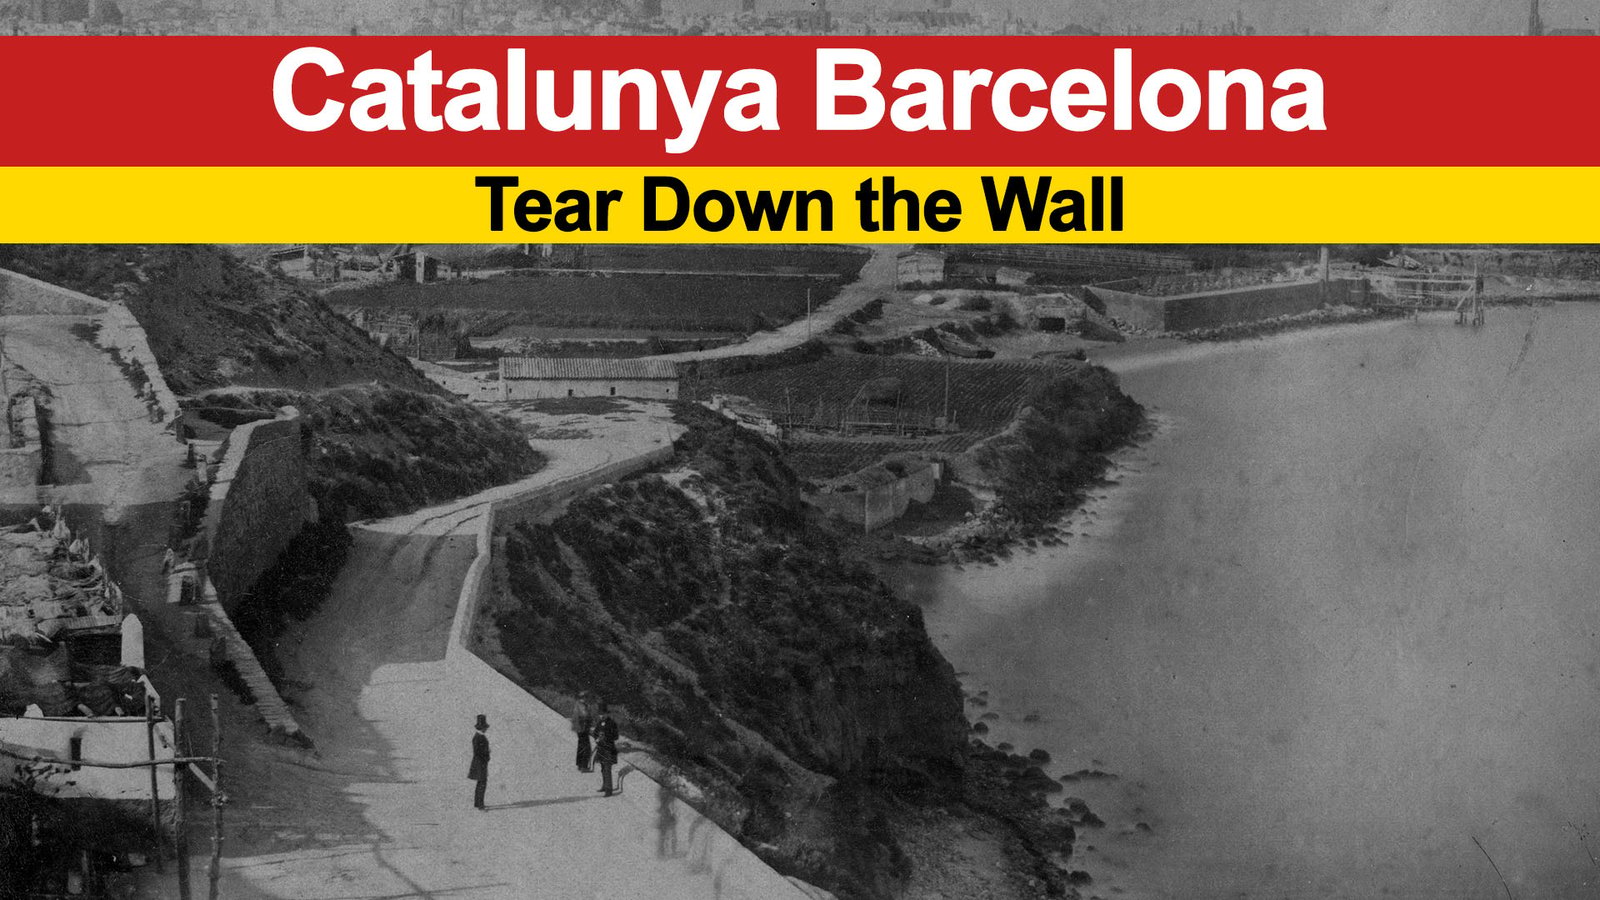 Tear Down the Wall